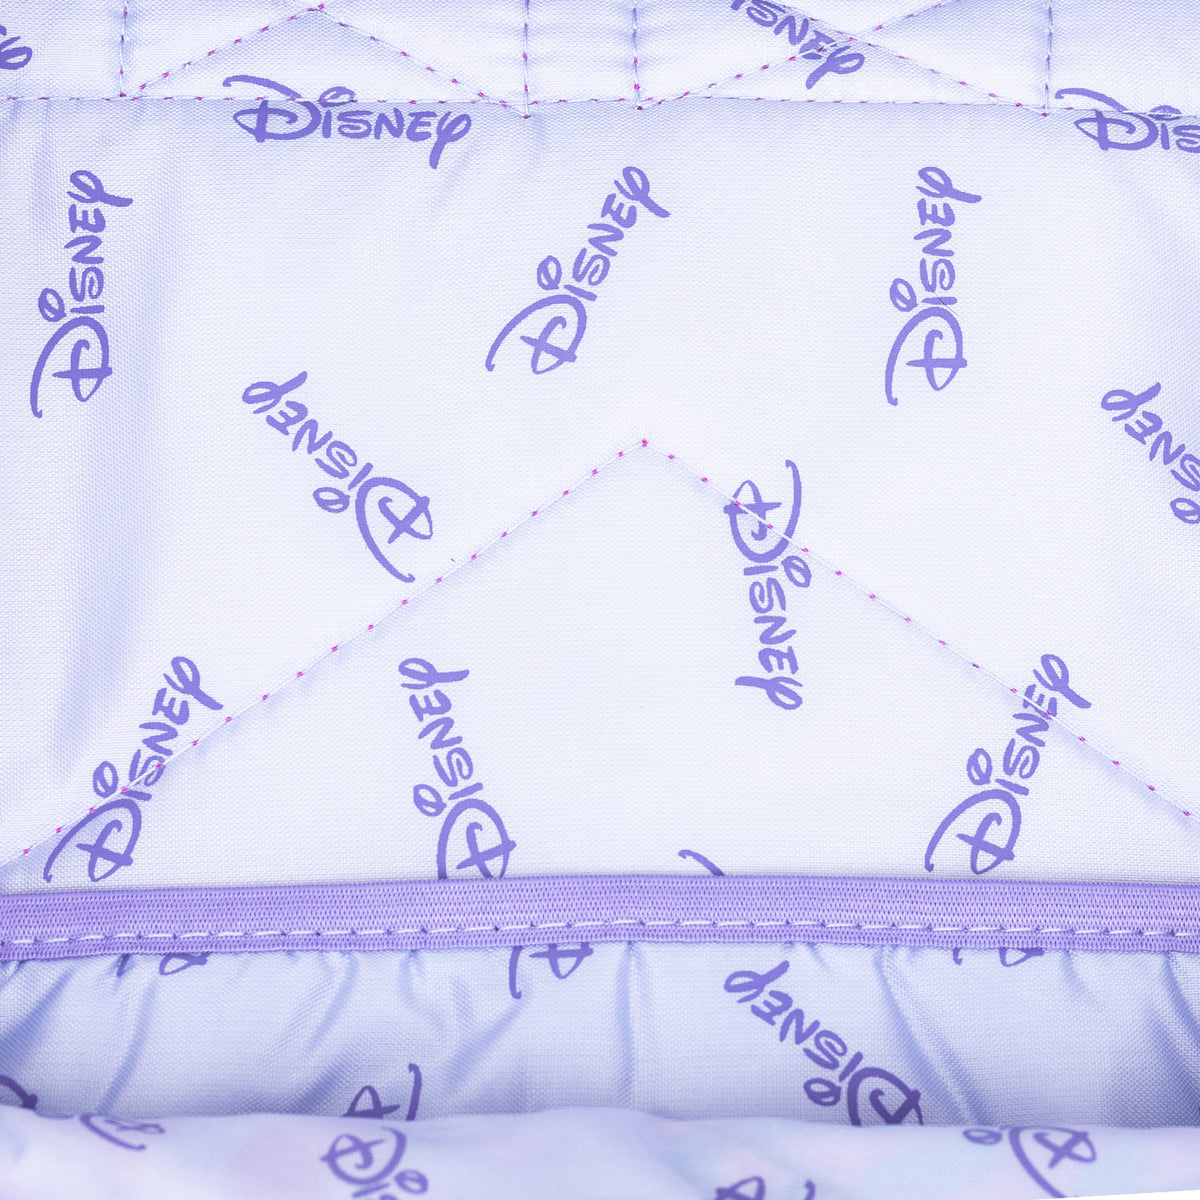 Disney Princesses 17&quot; Full Size Nylon Backpack